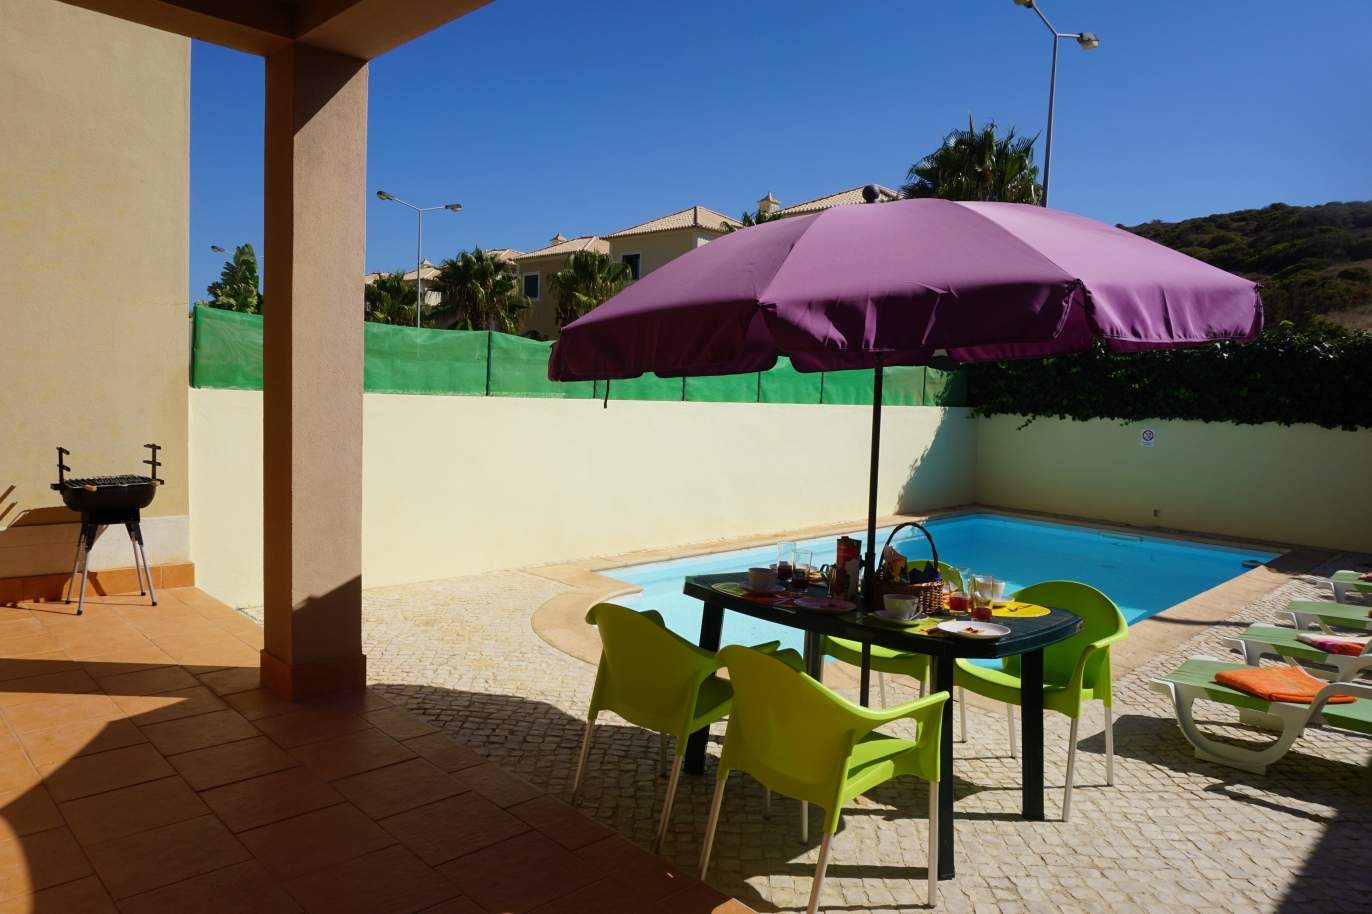 Venda de moradia com piscina em Budens, Vila do Bispo, Algarve_118781